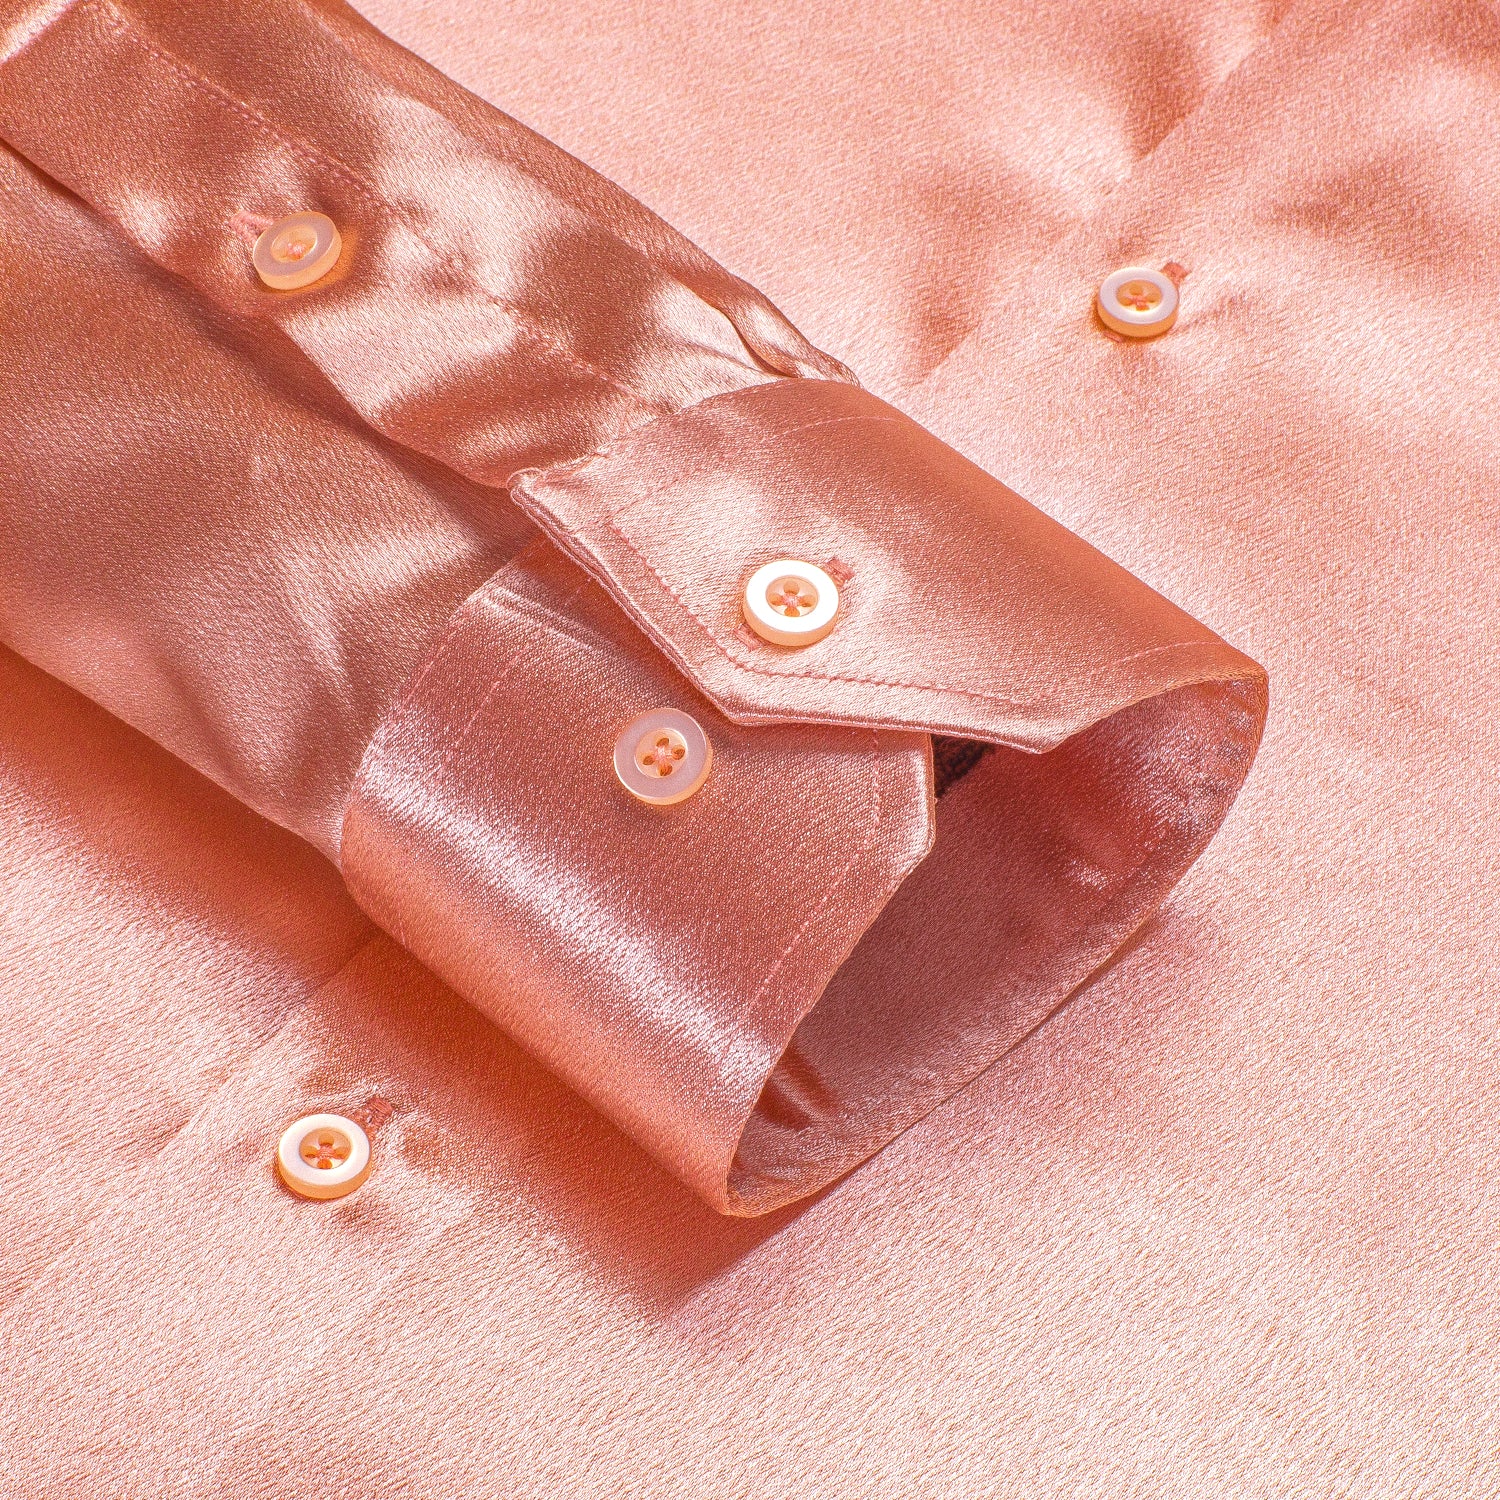 Coral Pink Satin Silk Men's Long Sleeve Shirt